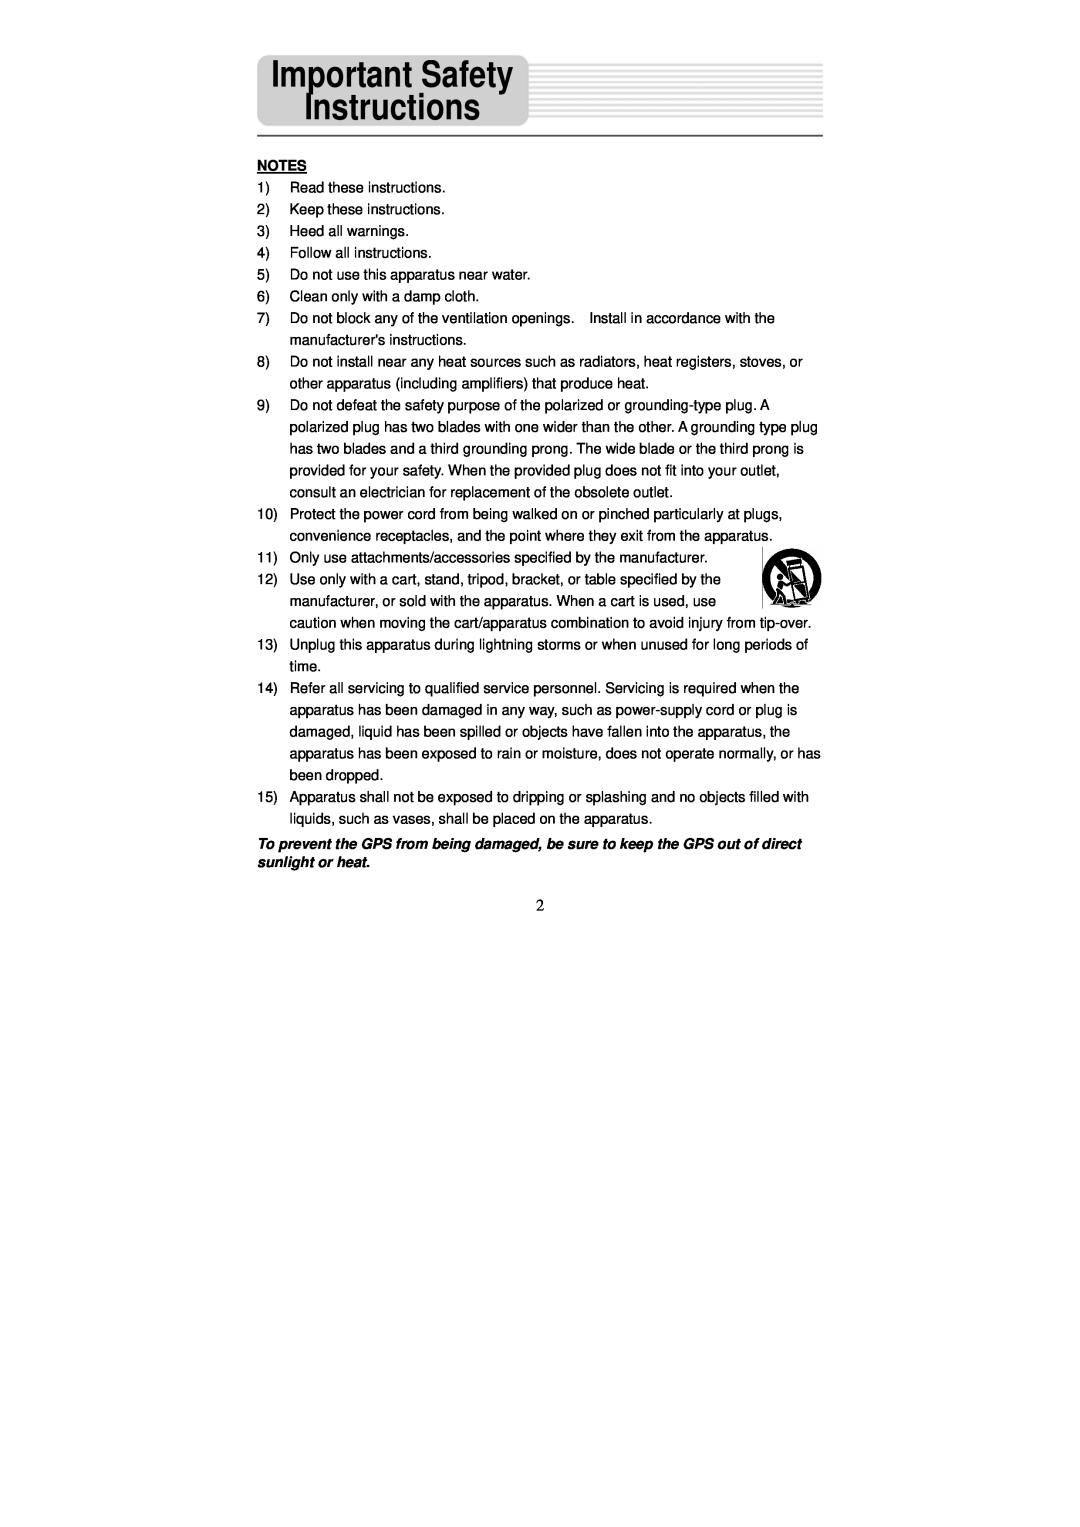 Nextar X3-09 operating instructions Important Safety Instructions, Read these instructions 2 Keep these instructions 